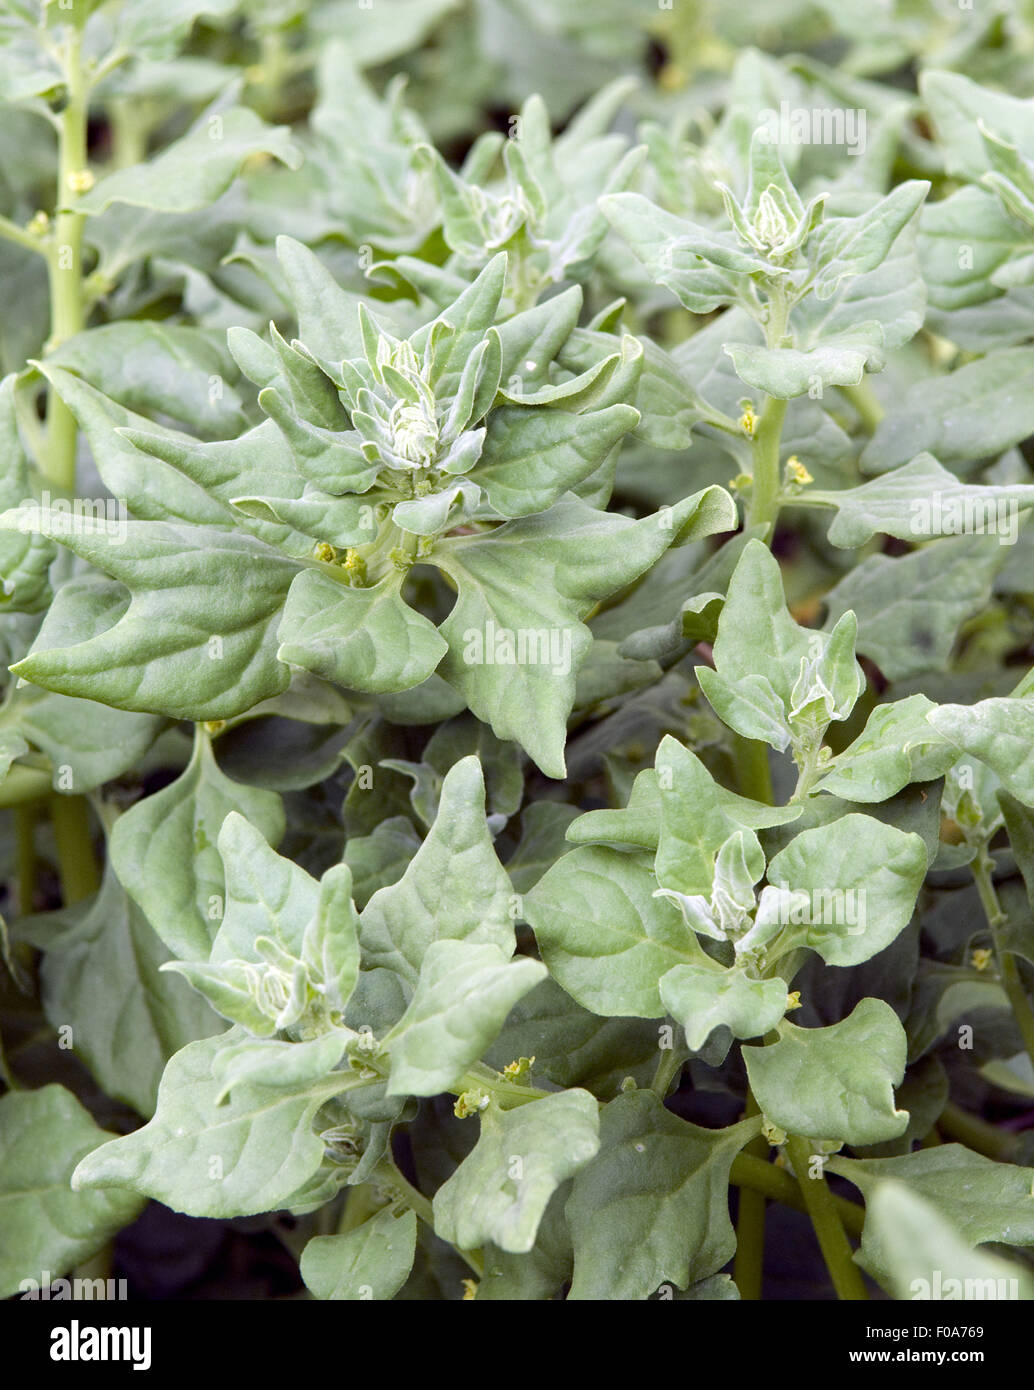 Neuseelaender Spinat, Tetragonia, Neuseelaendischer Spinat, Stock Photo